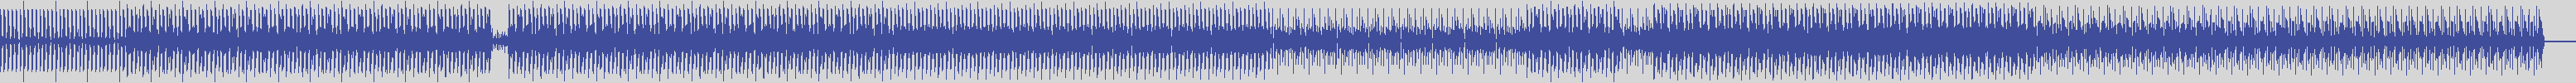 nf_boyz_records [NFY013] Blue Sensation - Panda Bear [Triba Edit] audio wave form